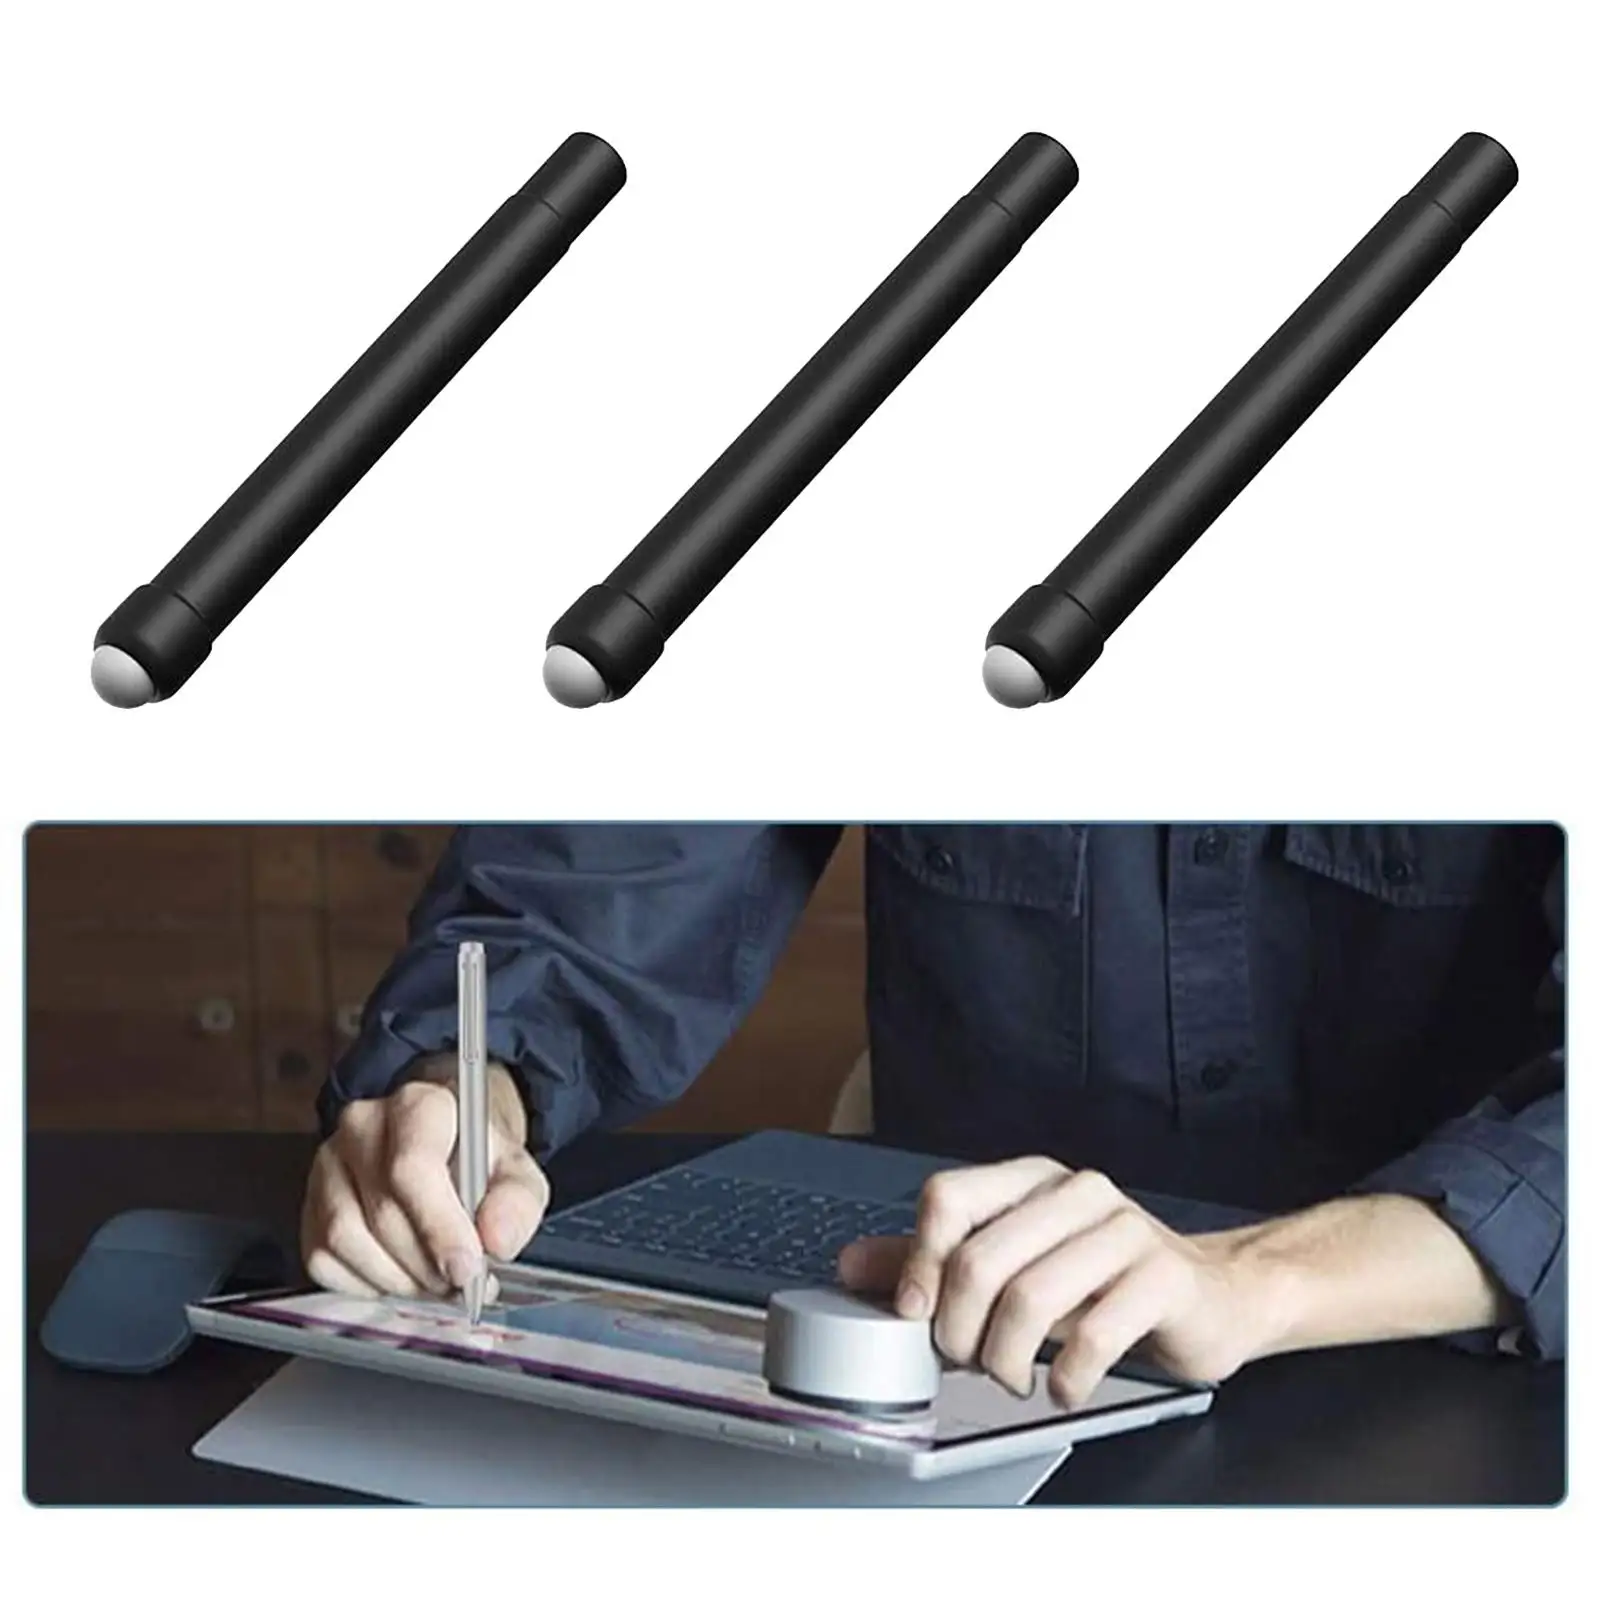 3x Stylus Pen Tips HB Type Refill for Microsoft Surface Pro 7 6 5 4 Book Stylus Pen Disc Tips